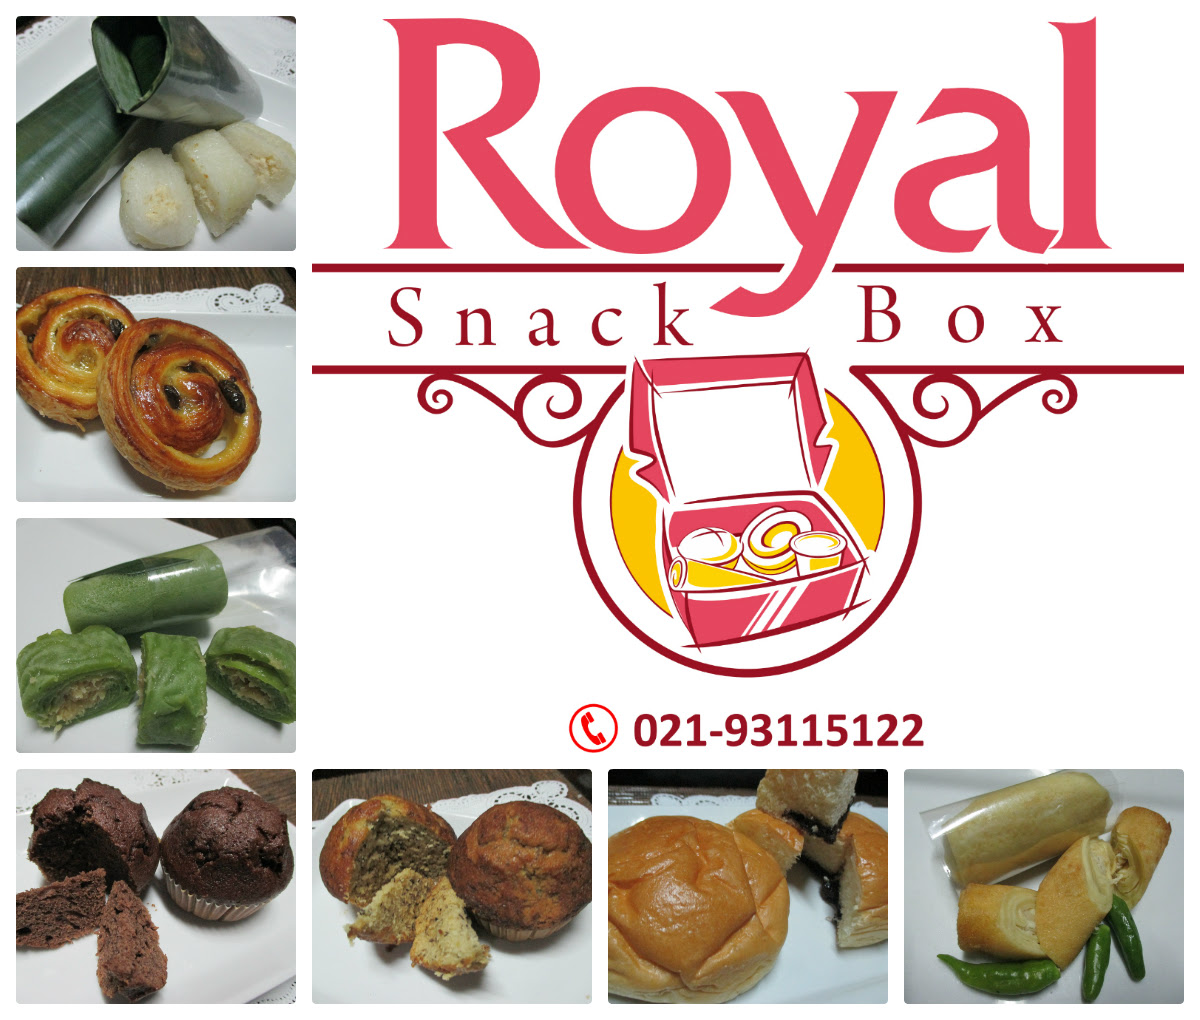 Paket Snack Box Murah Royal Snack Box